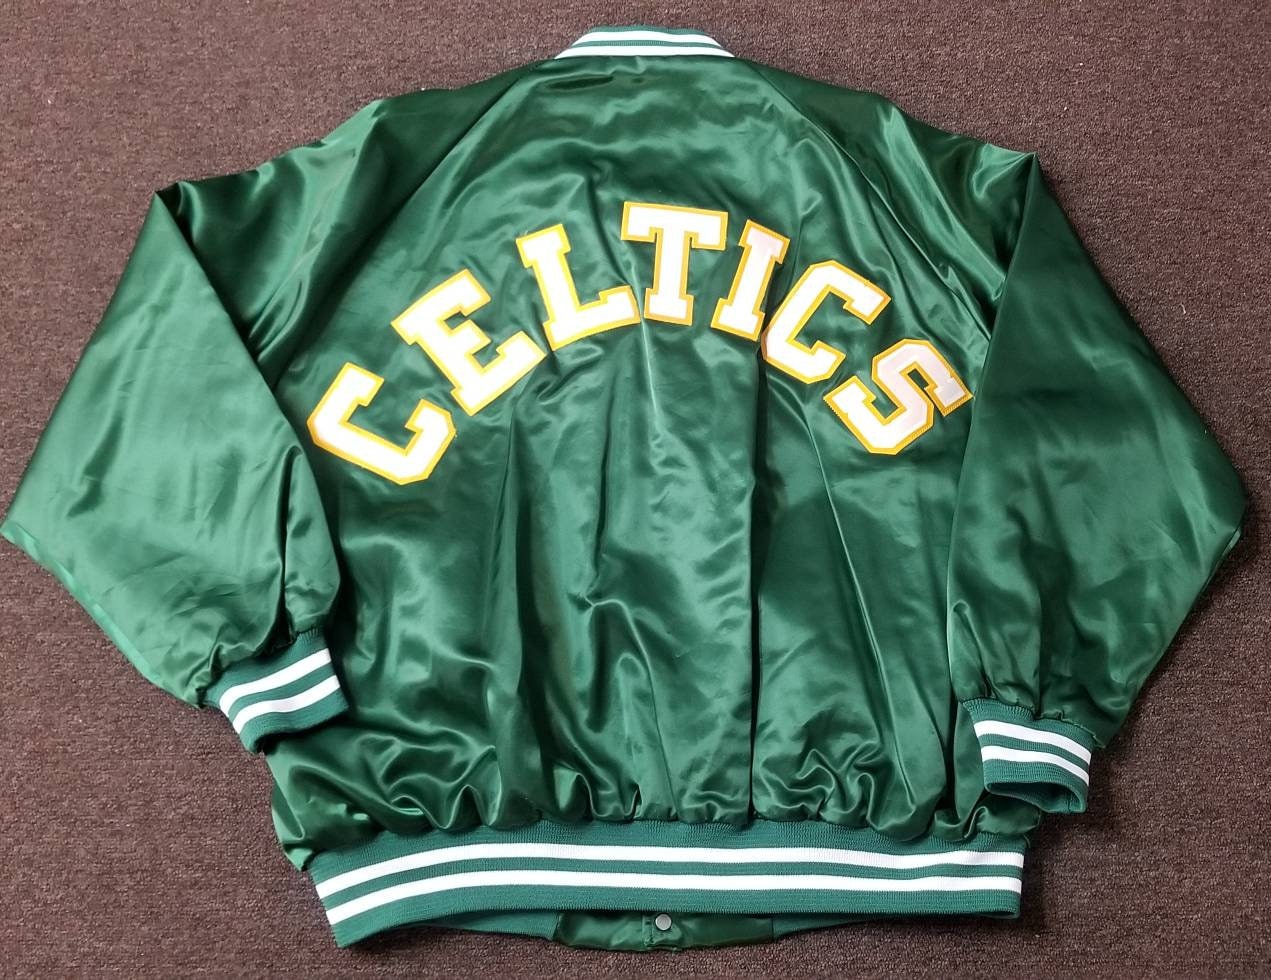 as-is* Distressed Boston Celtics Snap Button Starter Jacket